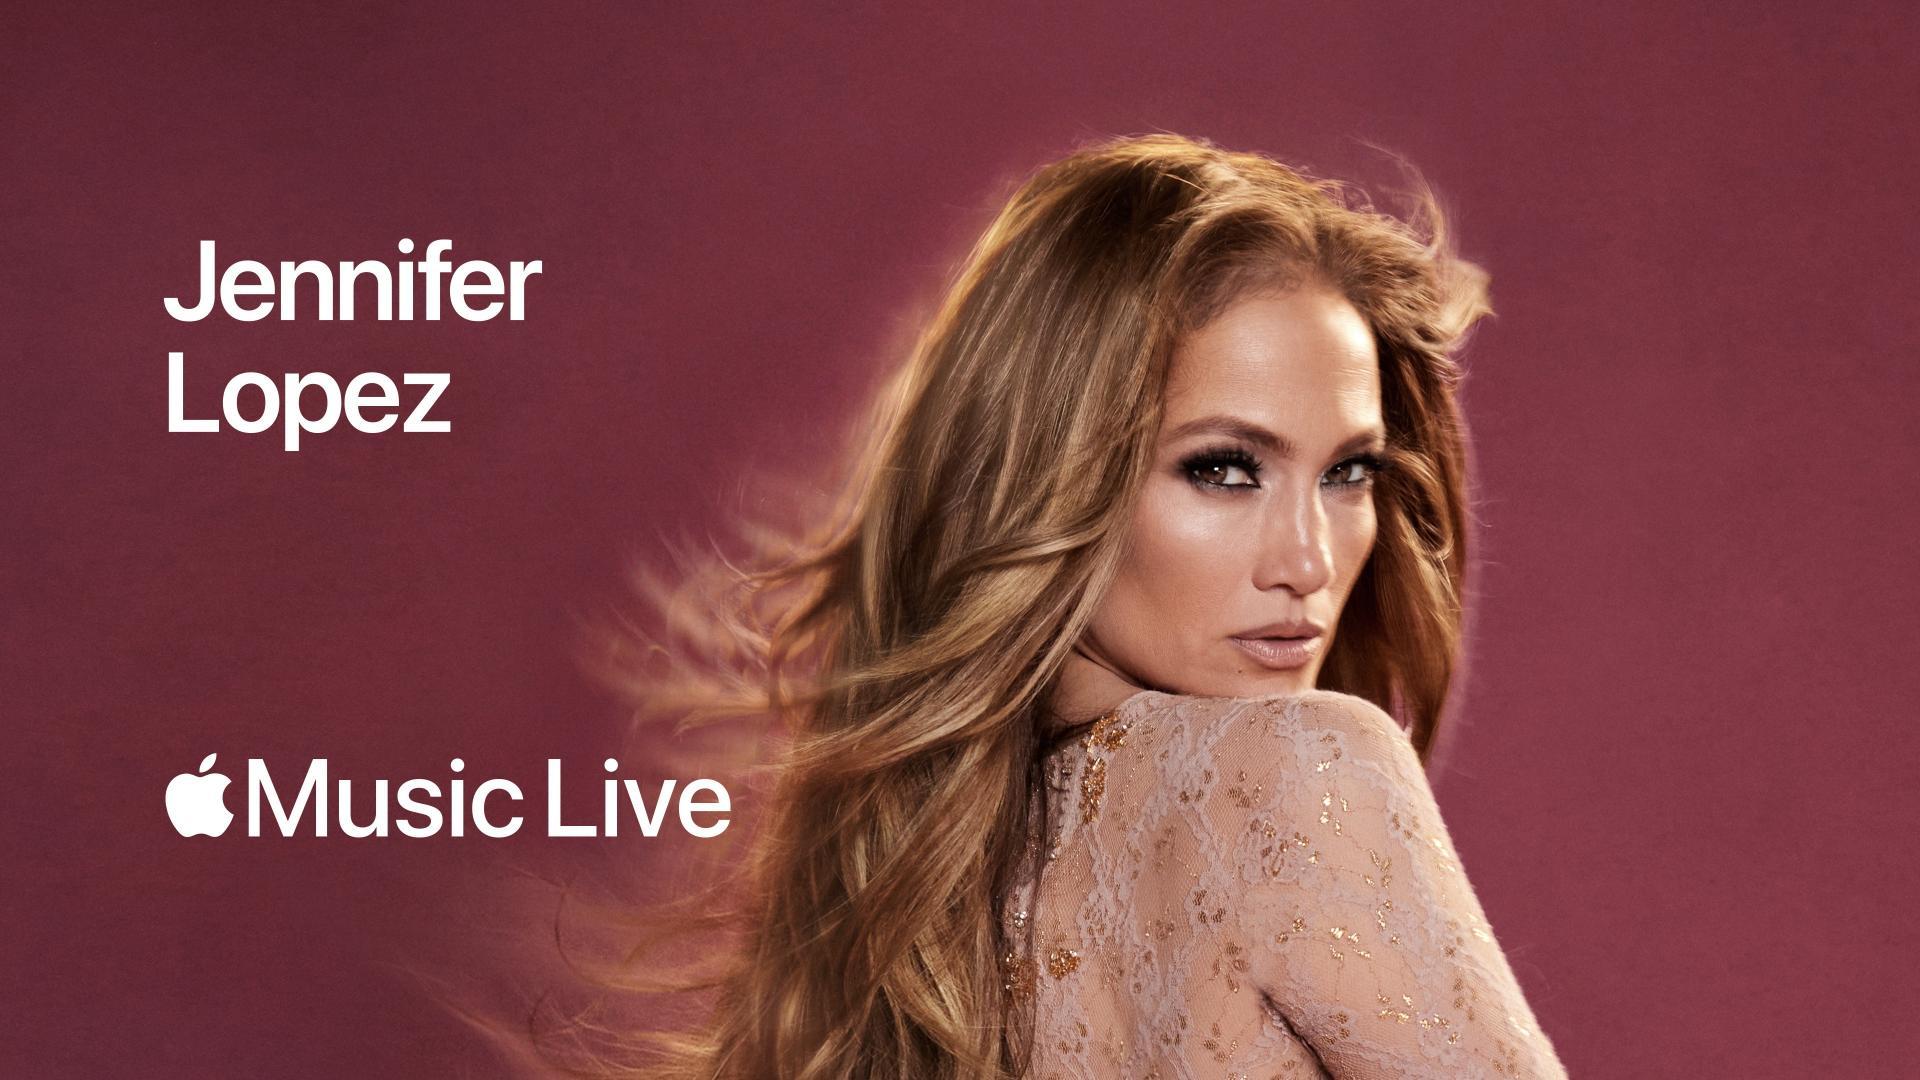 Image gallery for Apple Music Live Jennifer Lopez FilmAffinity